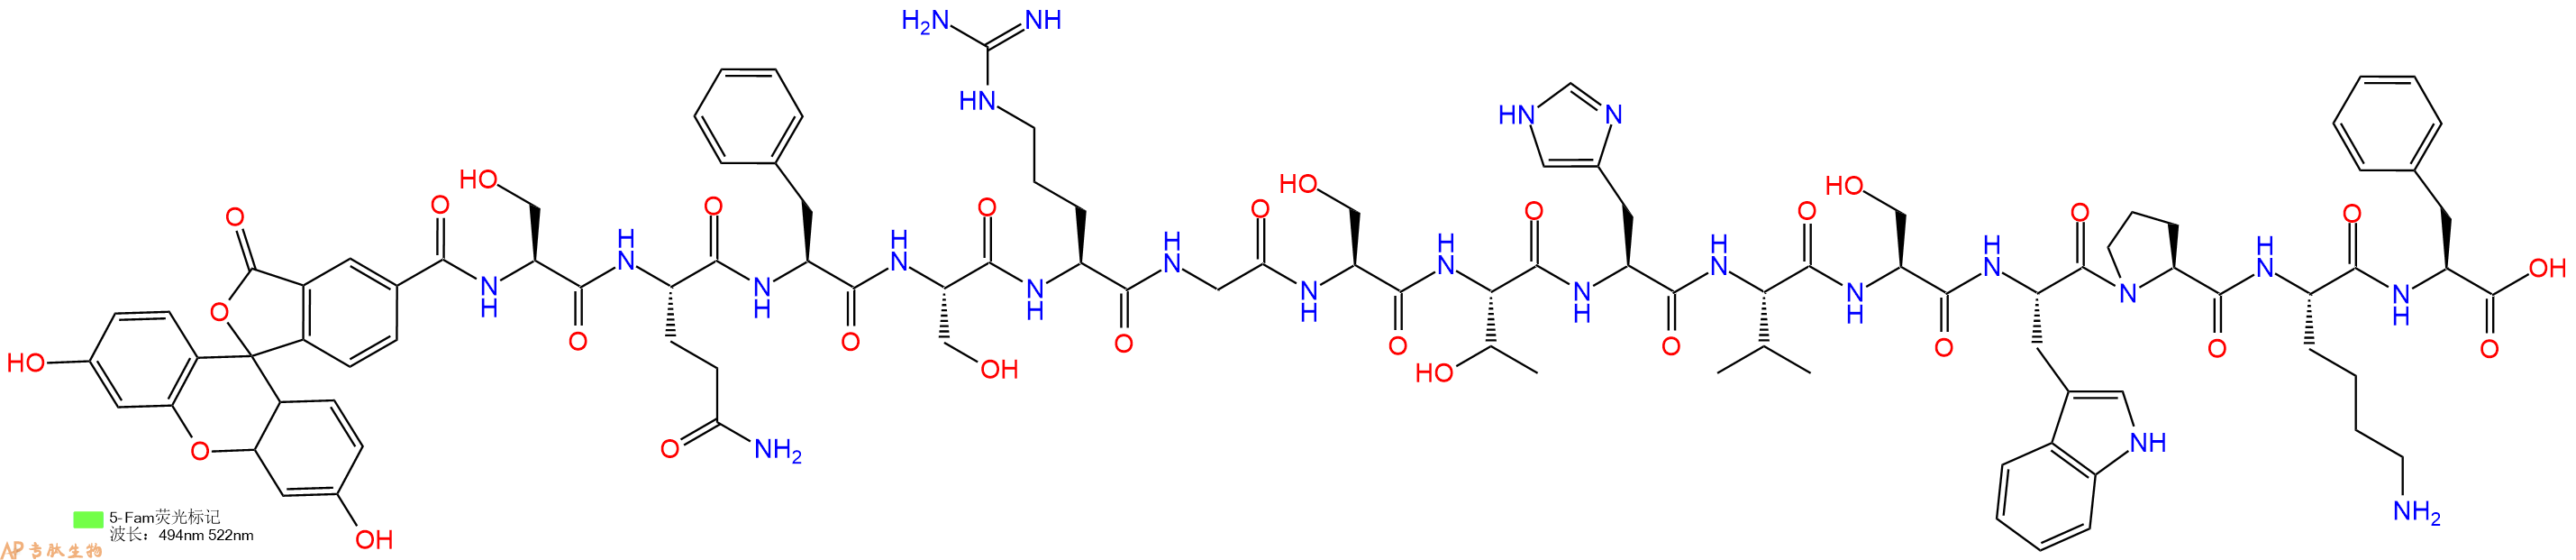 专肽生物产品5FAM-Ser-Gln-Phe-Ser-Arg-Gly-Ser-Thr-His-Val-Ser-T